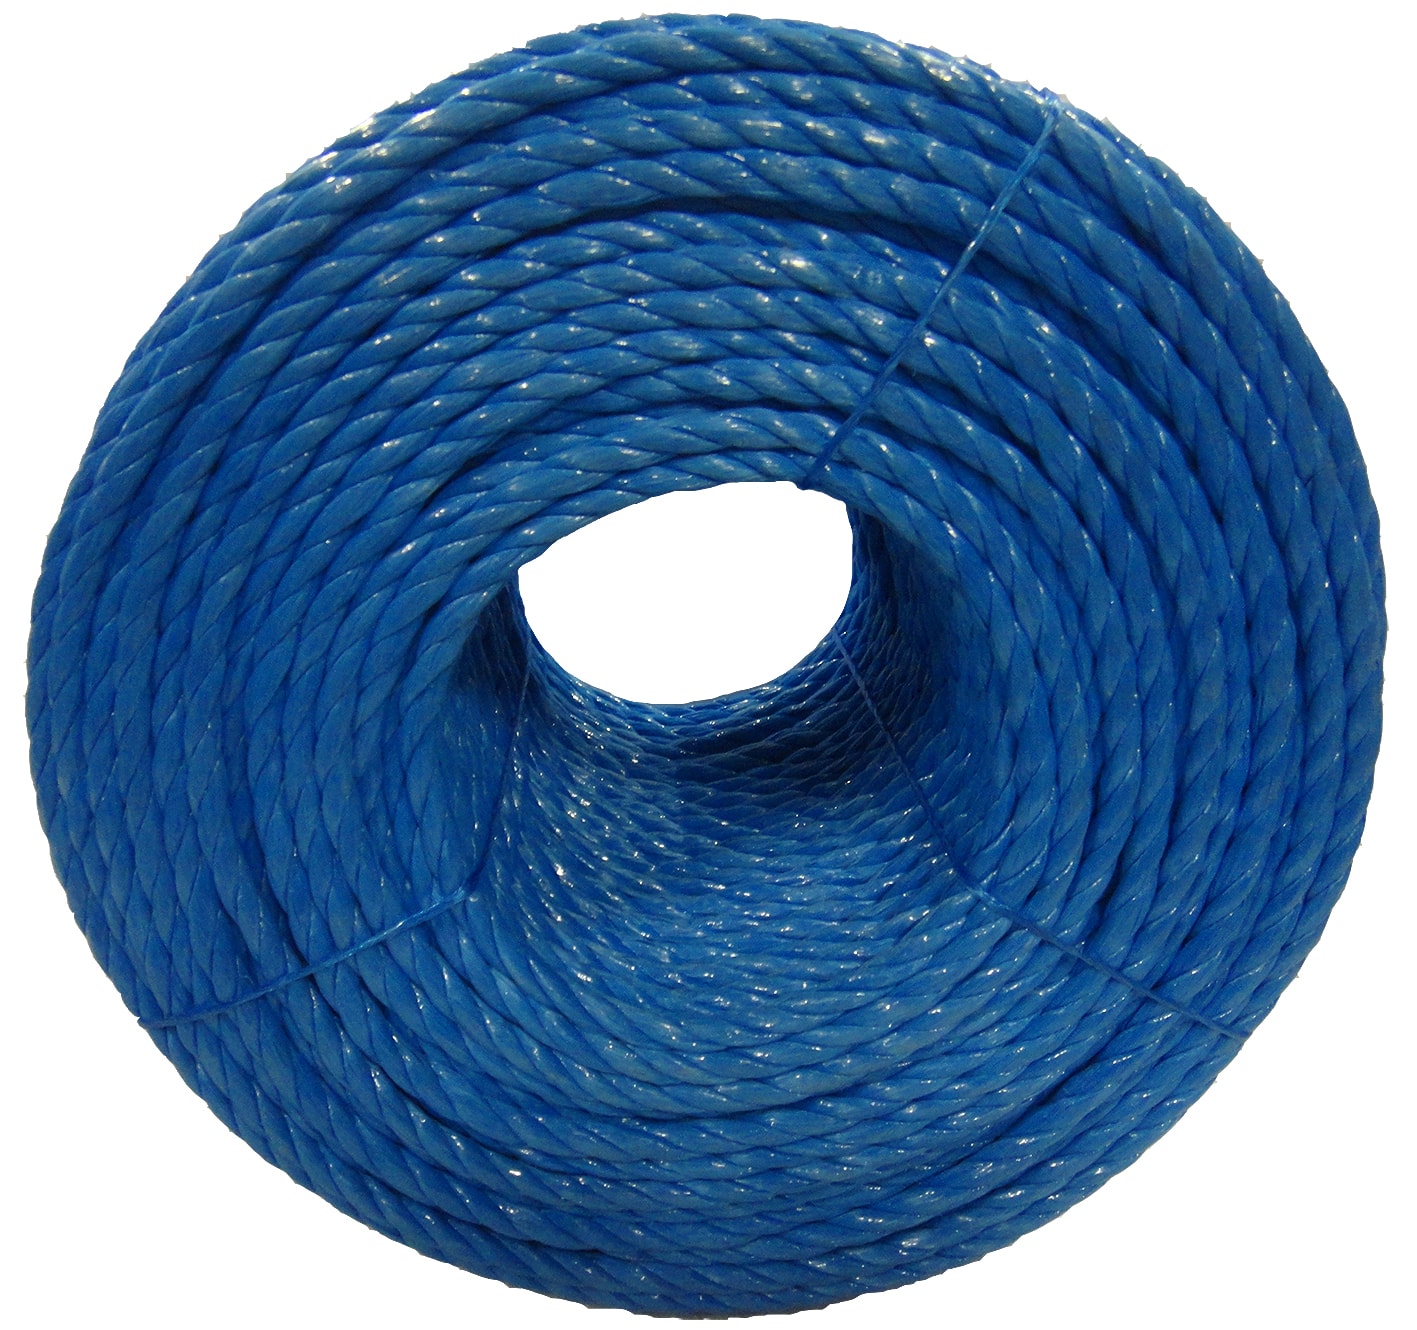 10mm Blue Polypropylene Rope x 220m Coil